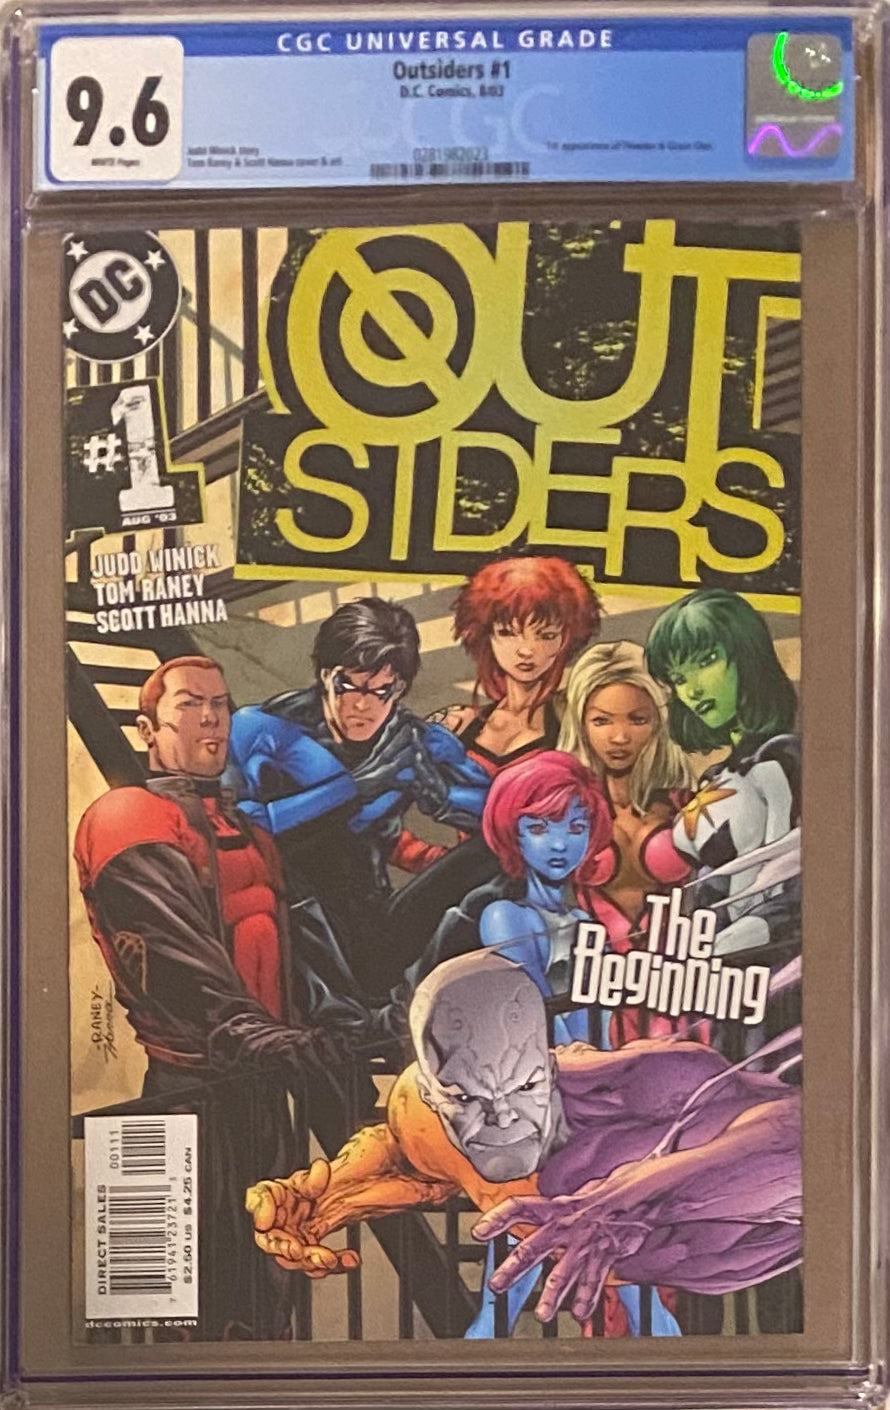 Outsiders #1 CGC 9.6